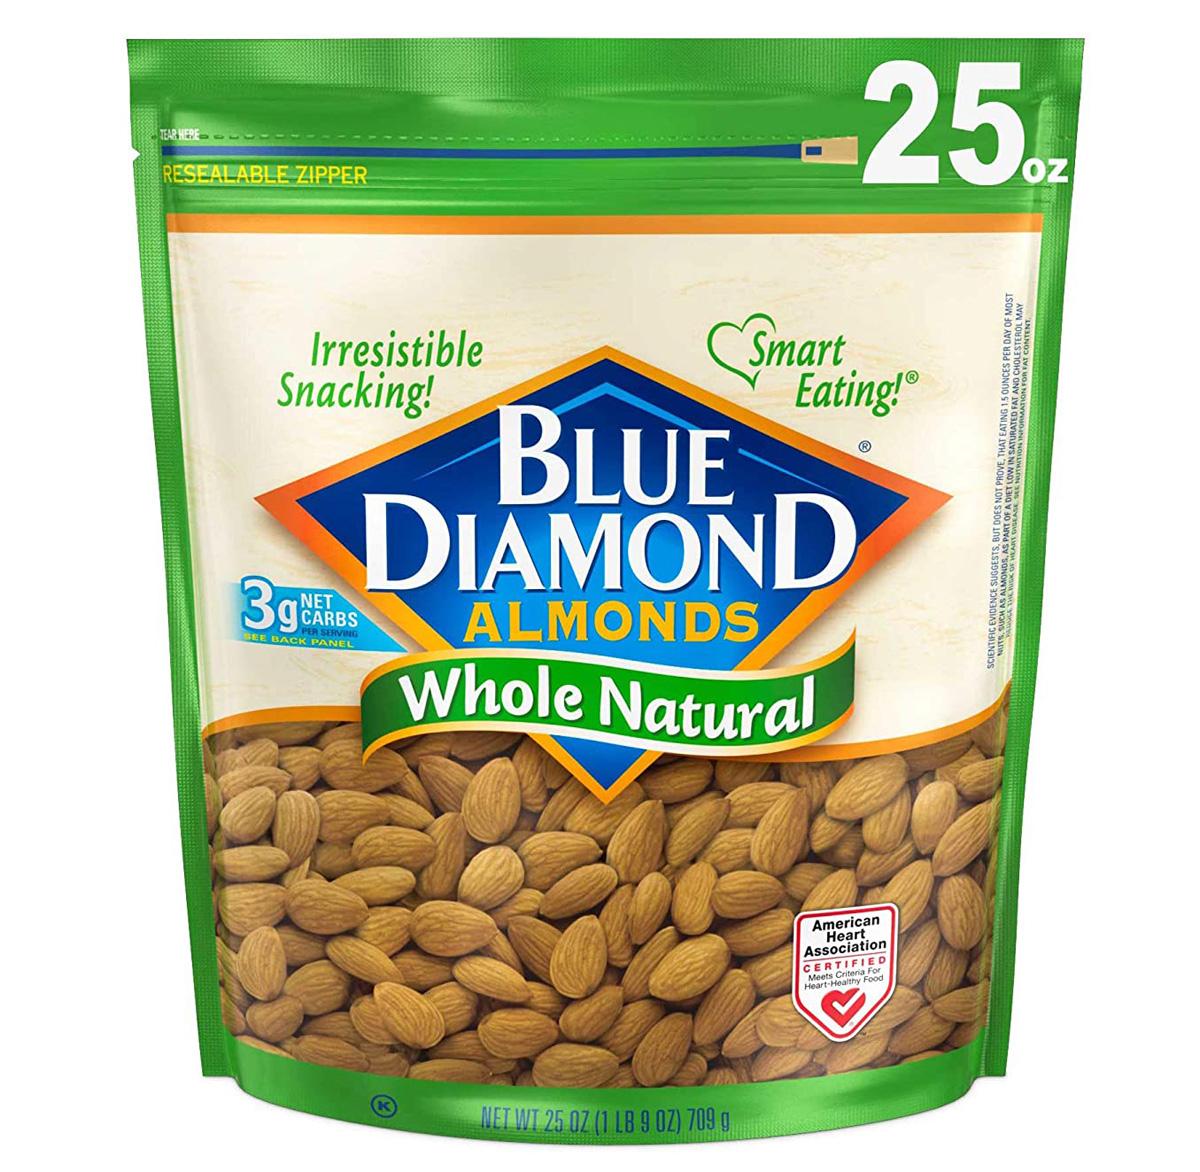 25oz Blue Diamond Almonds for $7.20 Shipped